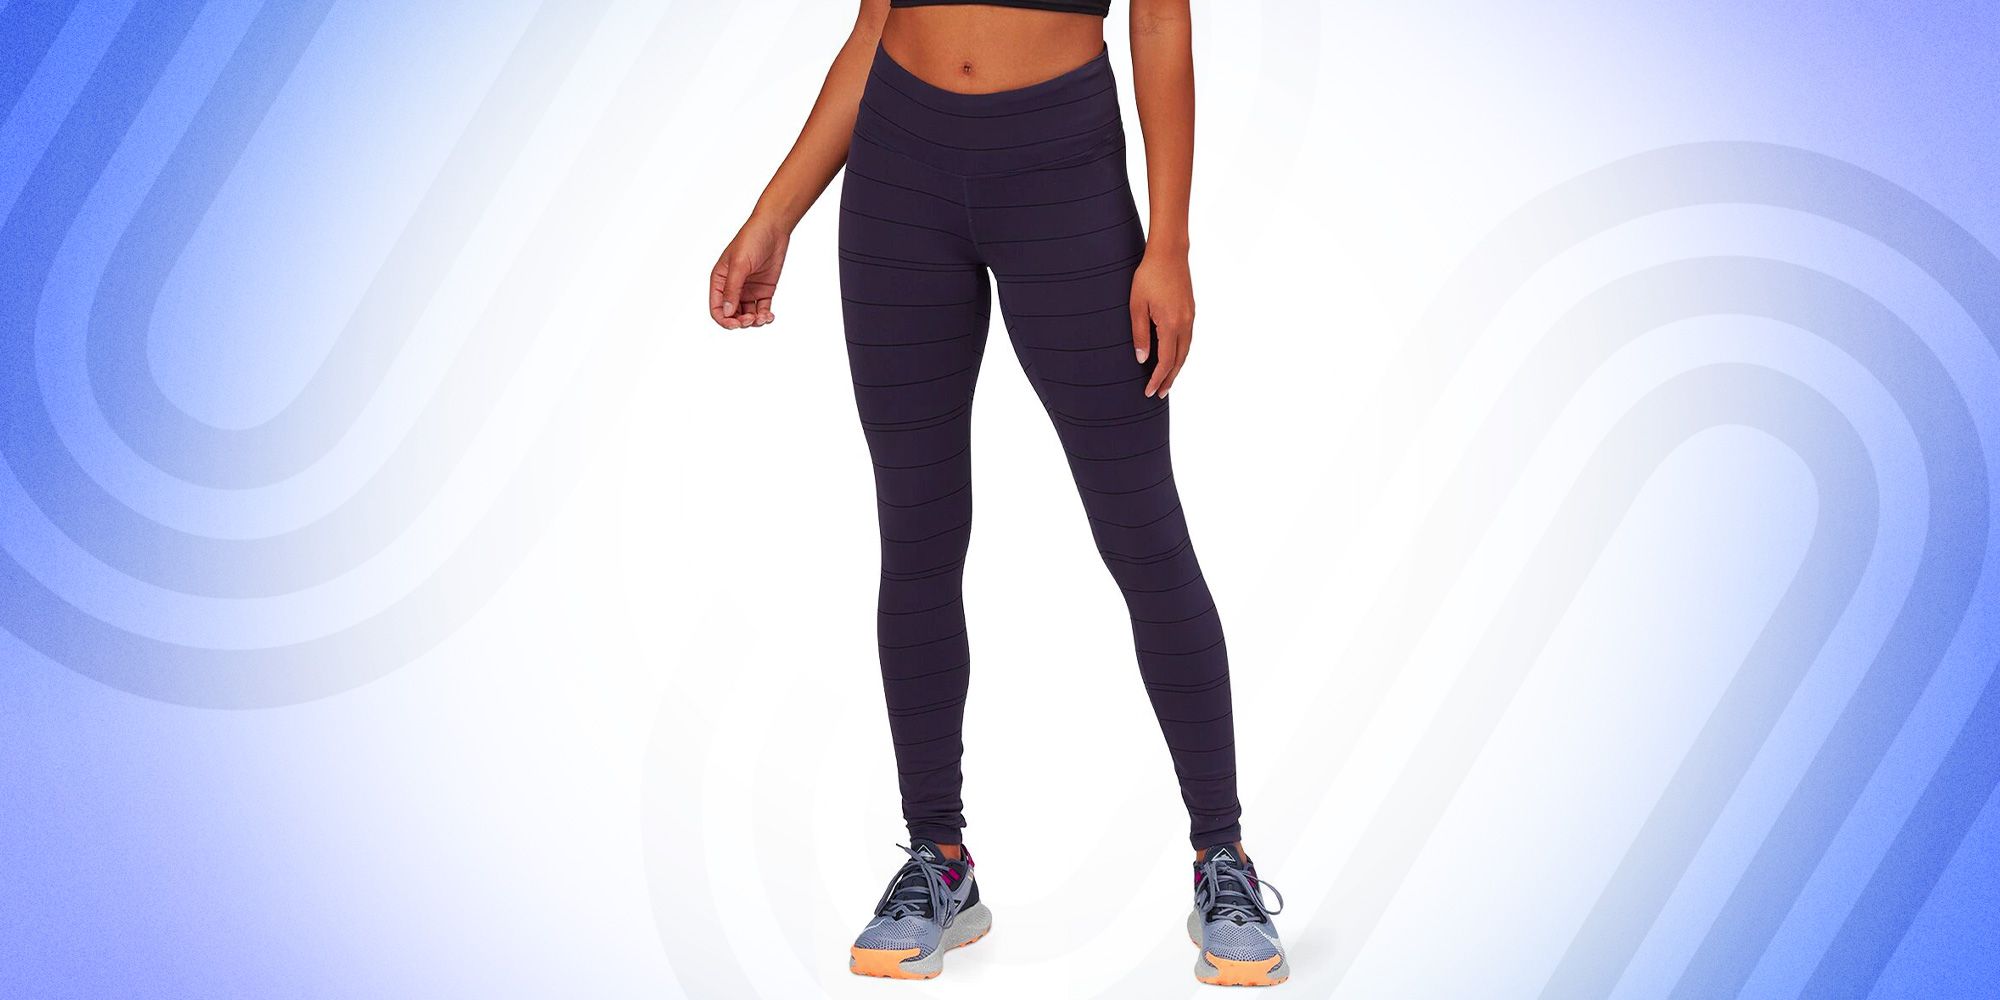 Women's Push Up Fitness Leggings Sport Running Yoga Gym Pants Workout Trousers k 